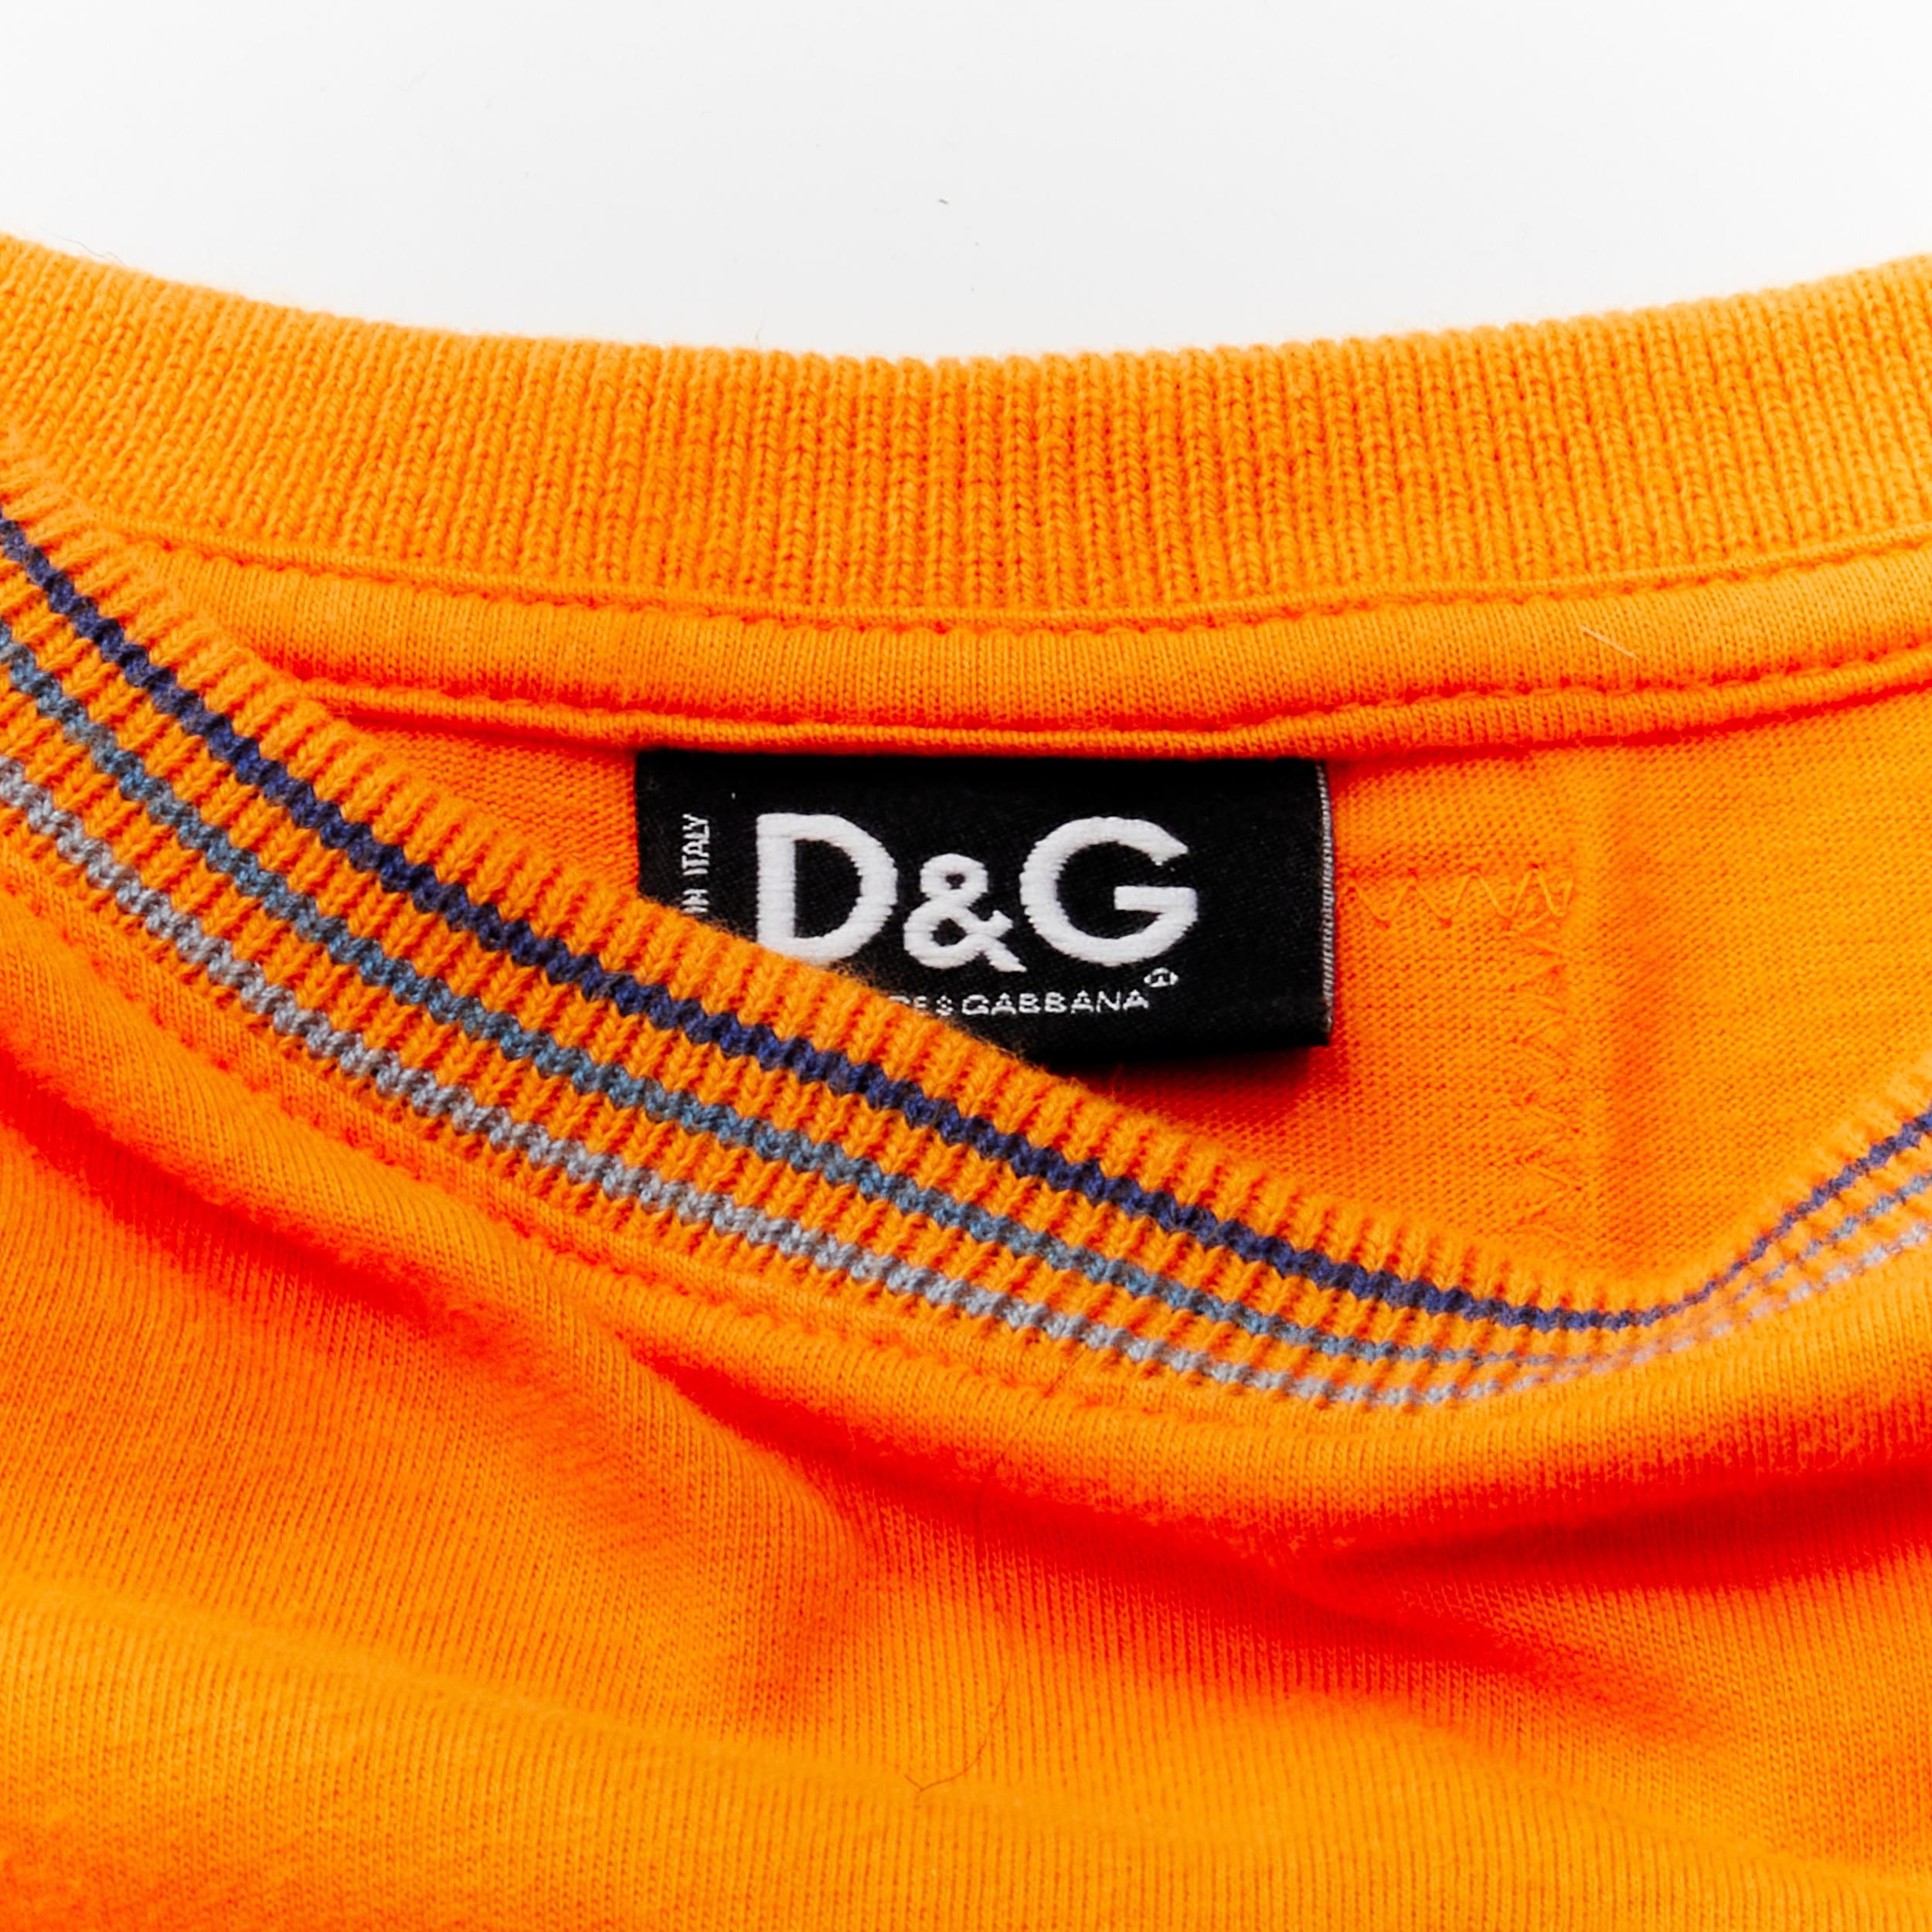 D&G DOLCE GABBANA Limited Edition Wonder Woman print orange cotton tshirt  XS 1